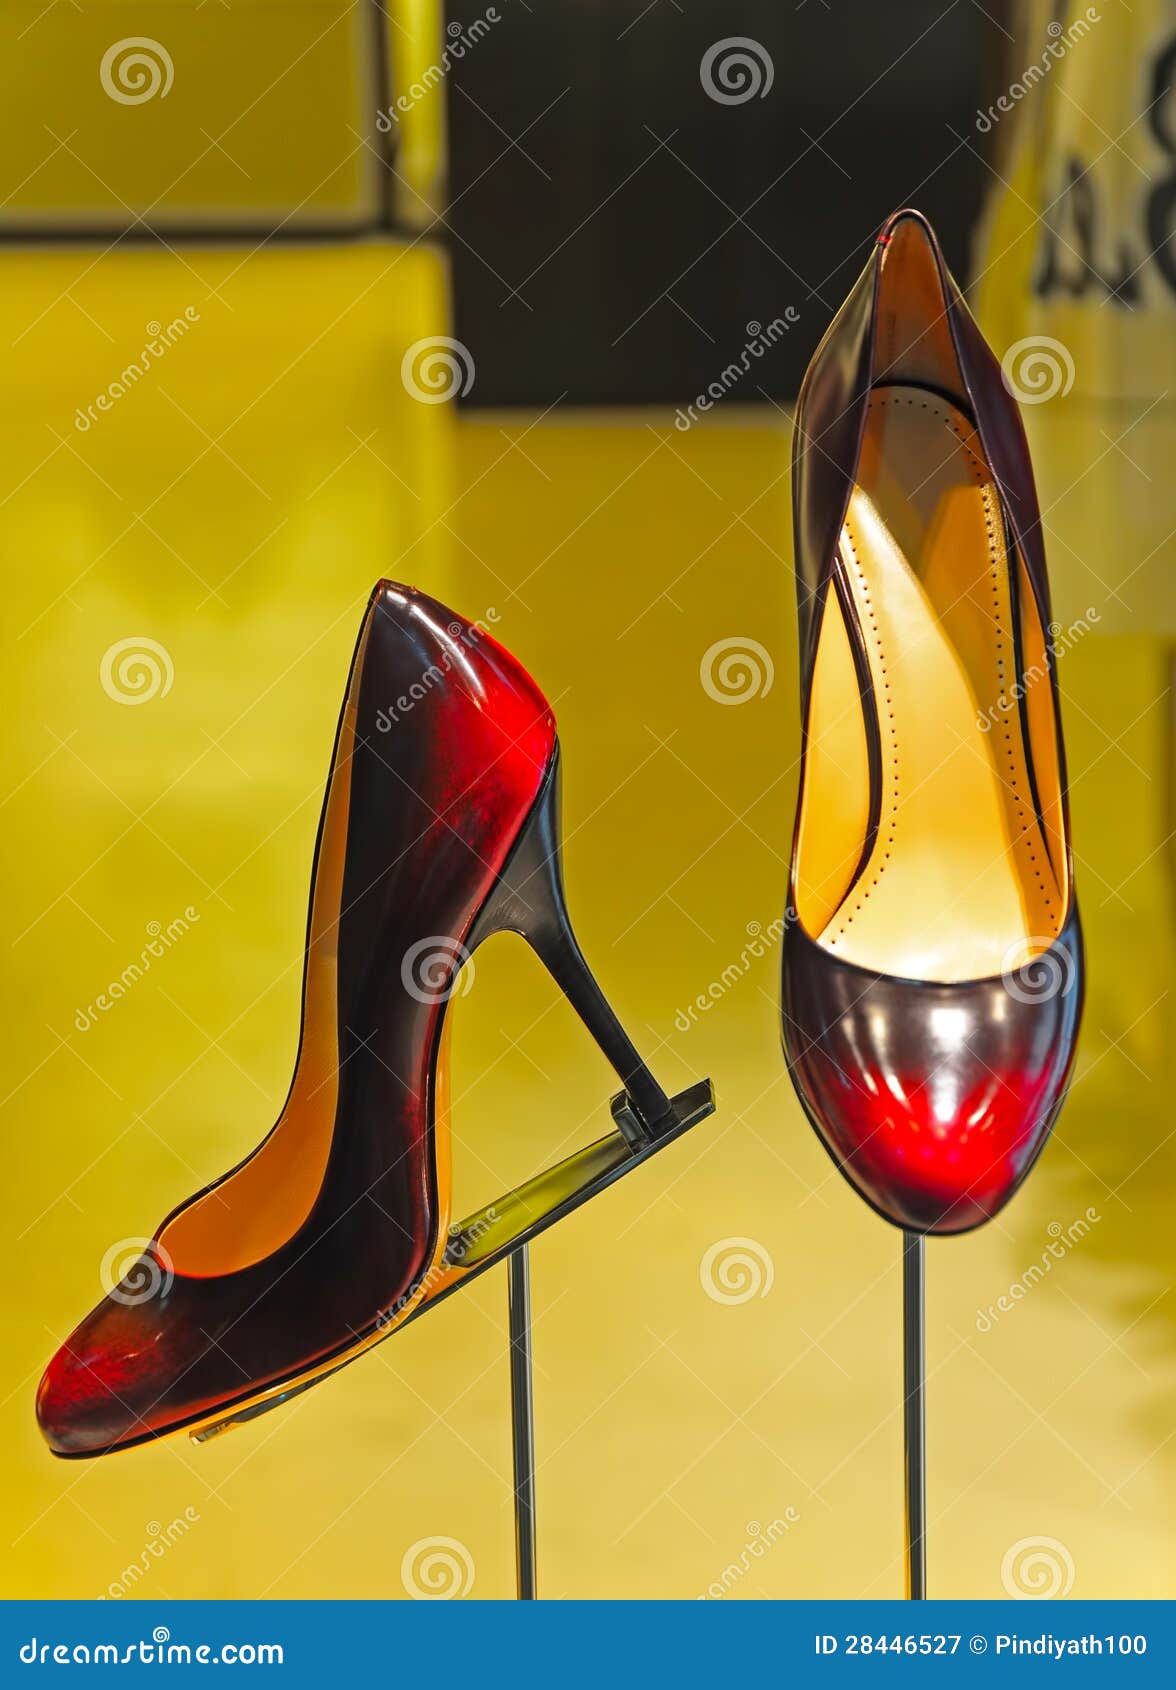 Elegant ladies shoes stock image. Image of style, brown - 28446527